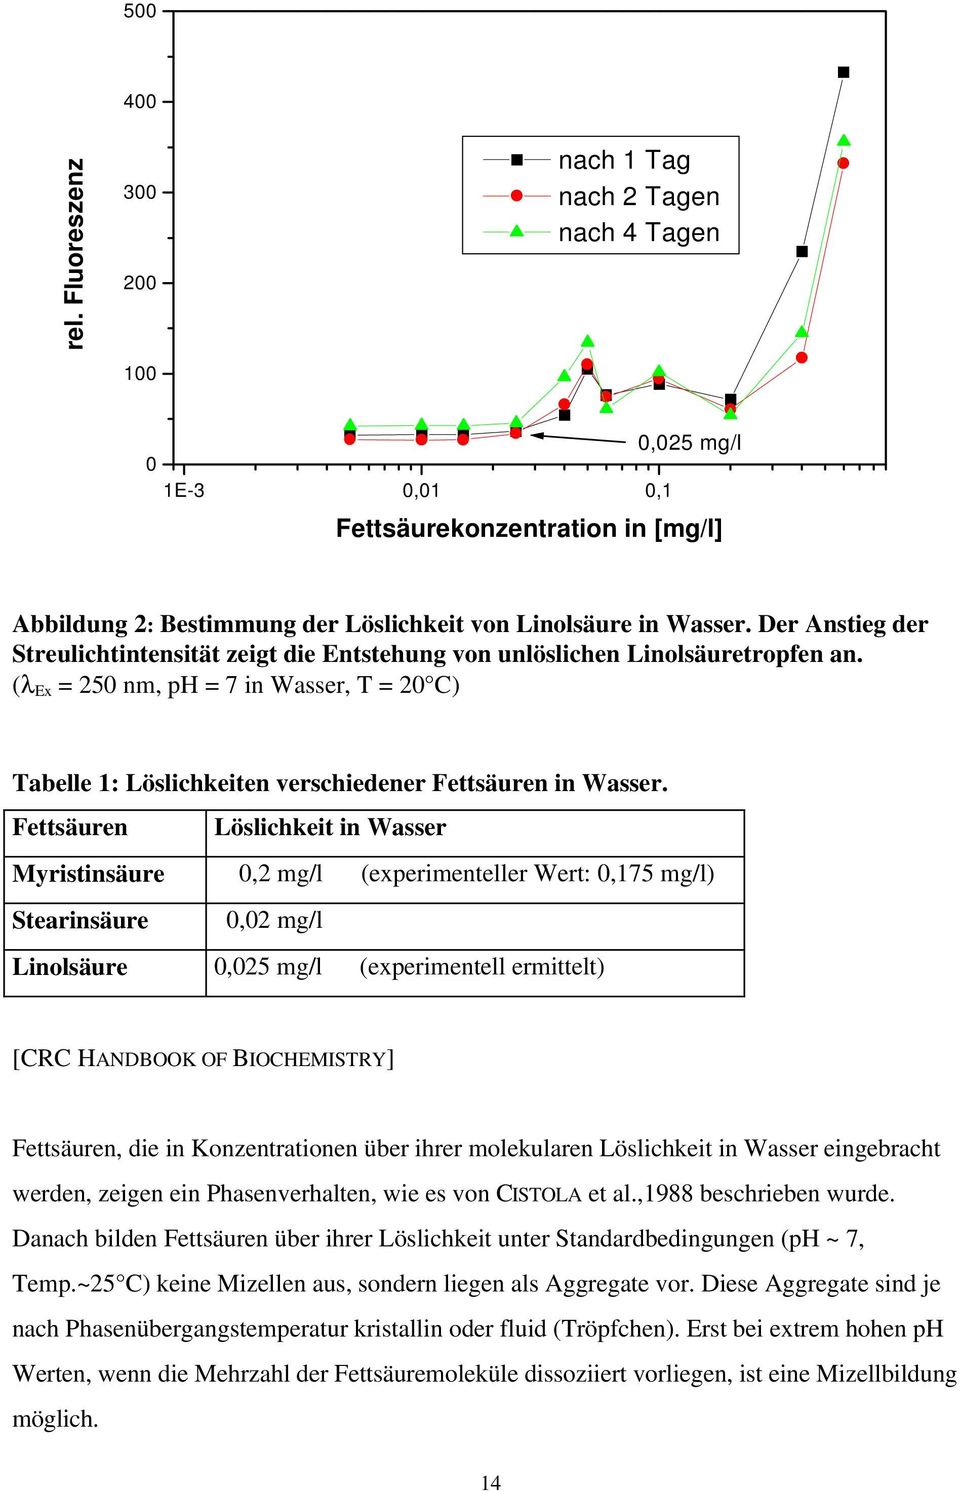 Fettsäuren Löslichkeit in Wasser Myristinsäure 0,2 mg/l (experimenteller Wert: 0,175 mg/l) Stearinsäure 0,02 mg/l Linolsäure 0,025 mg/l (experimentell ermittelt) [CRC HANDBOOK OF BIOCHEMISTRY]